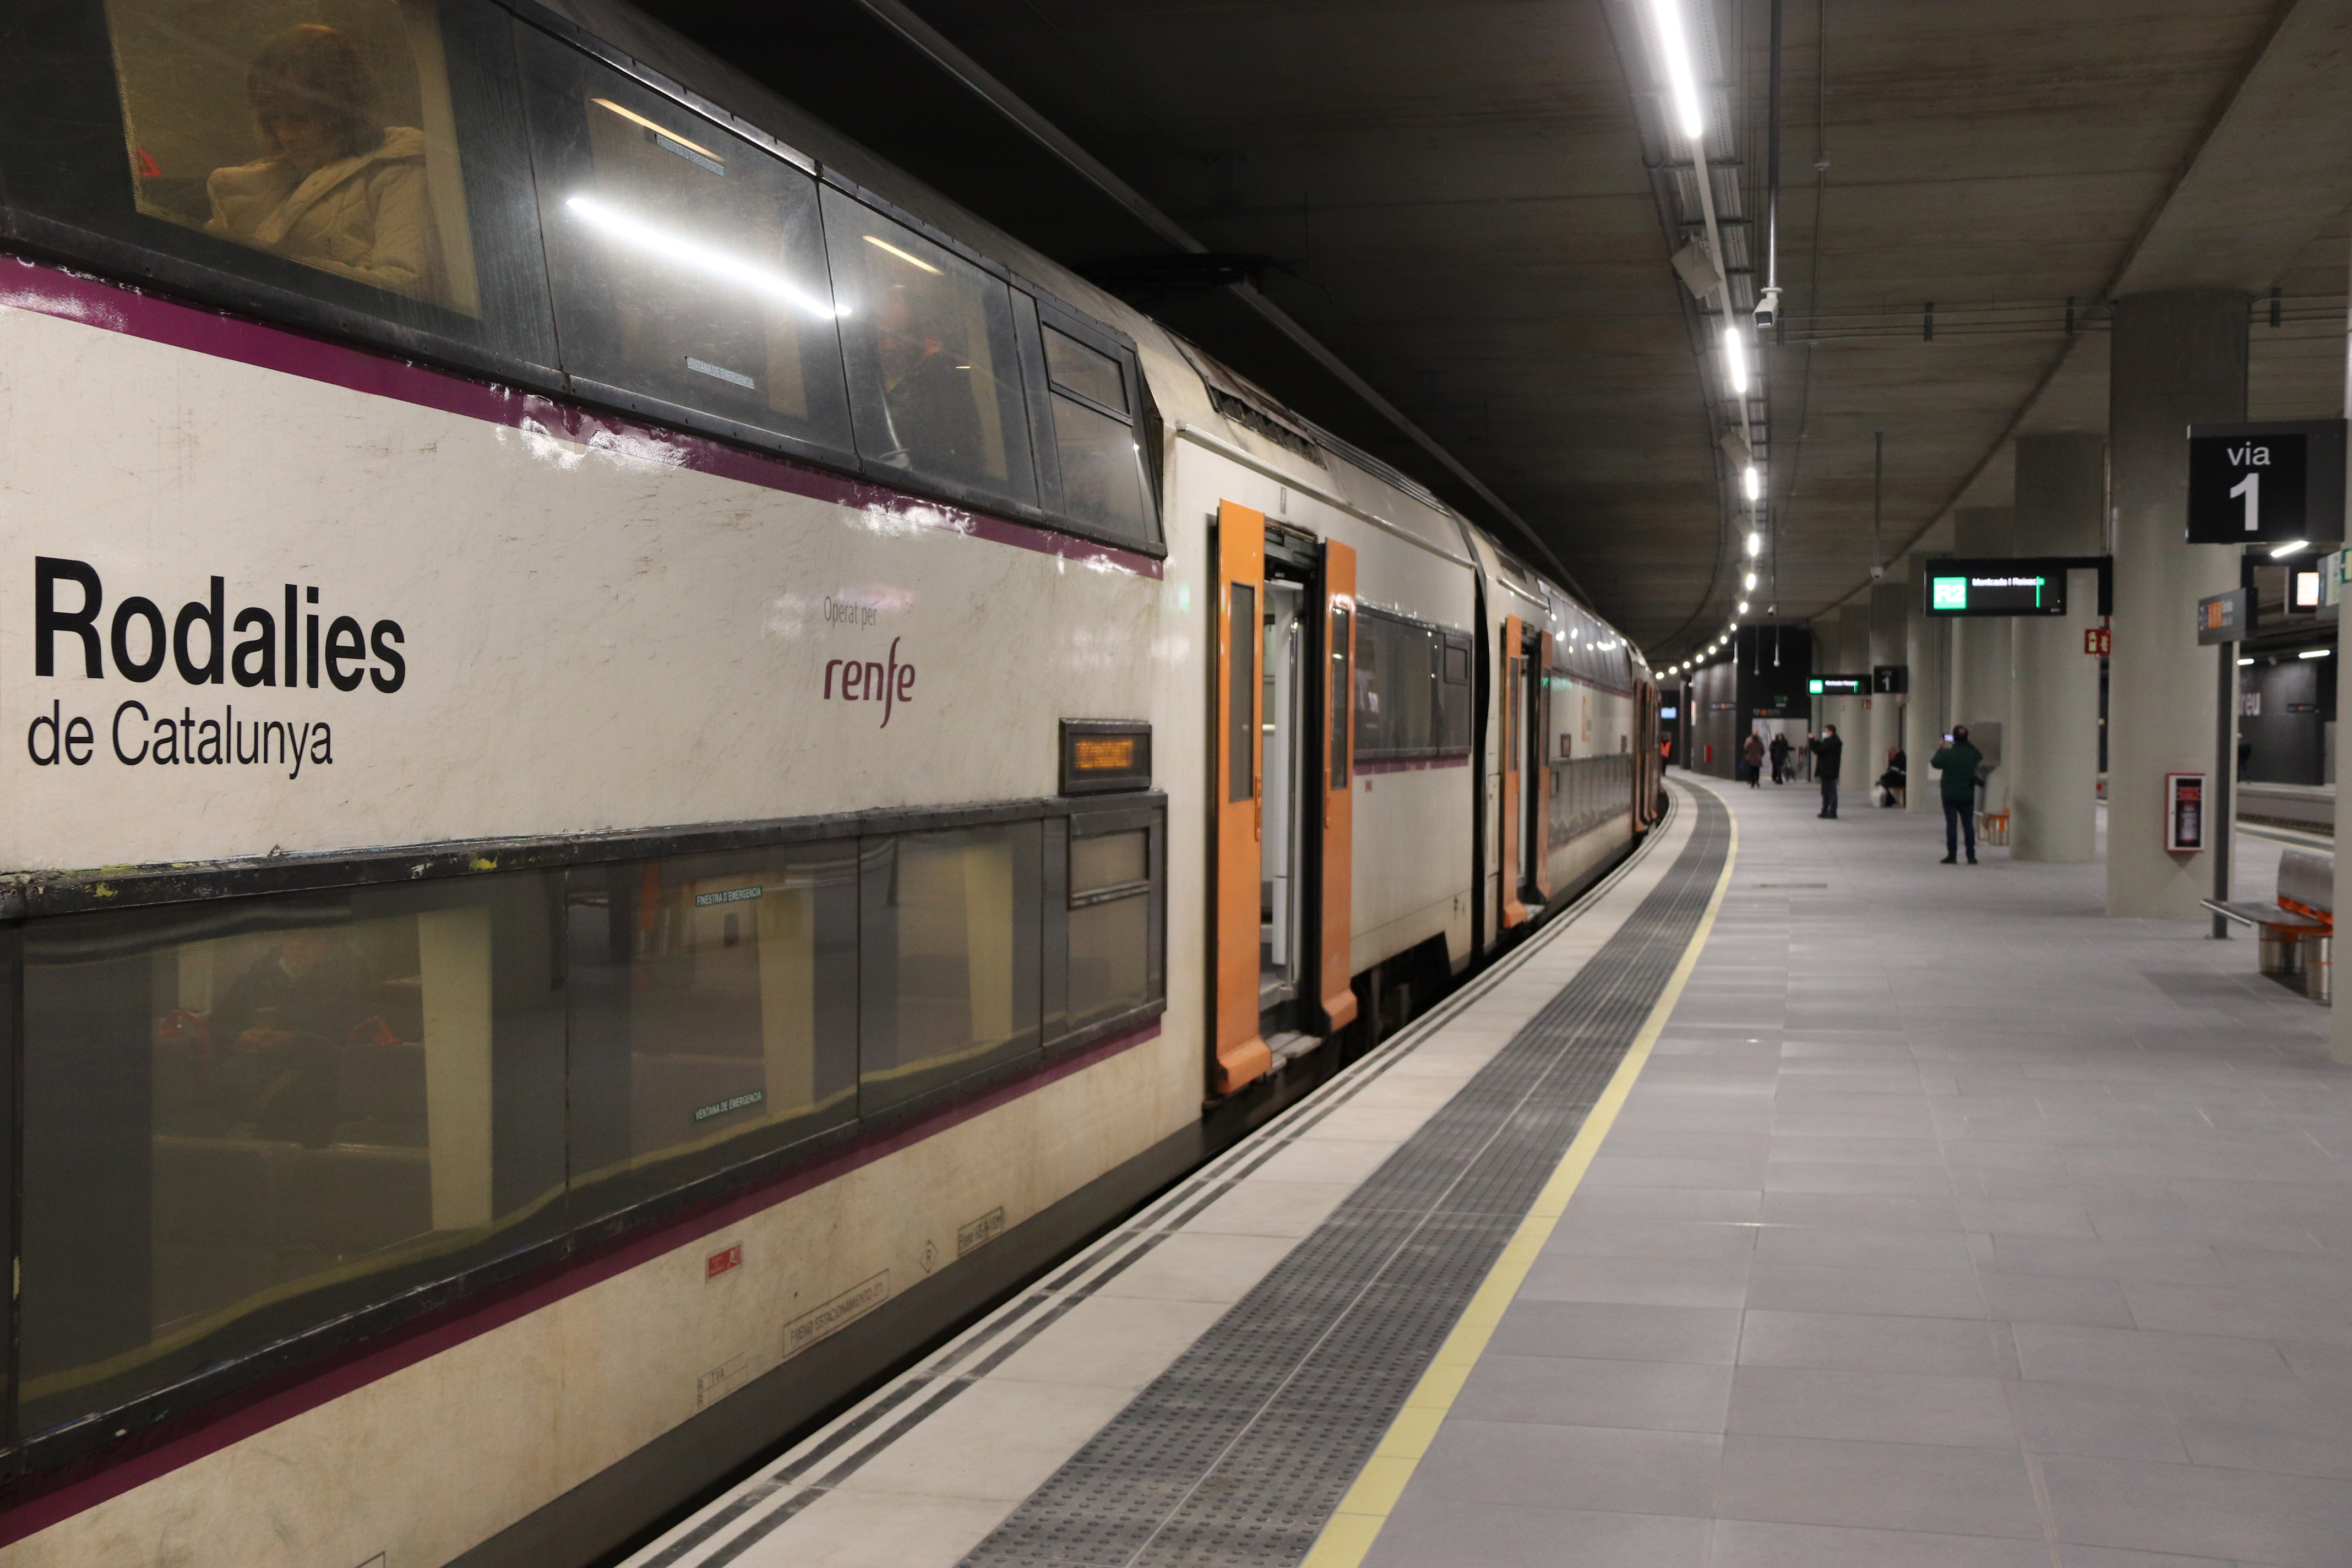 A Rodalies de Catalunya commuter train stopped at Sant Andreu train station